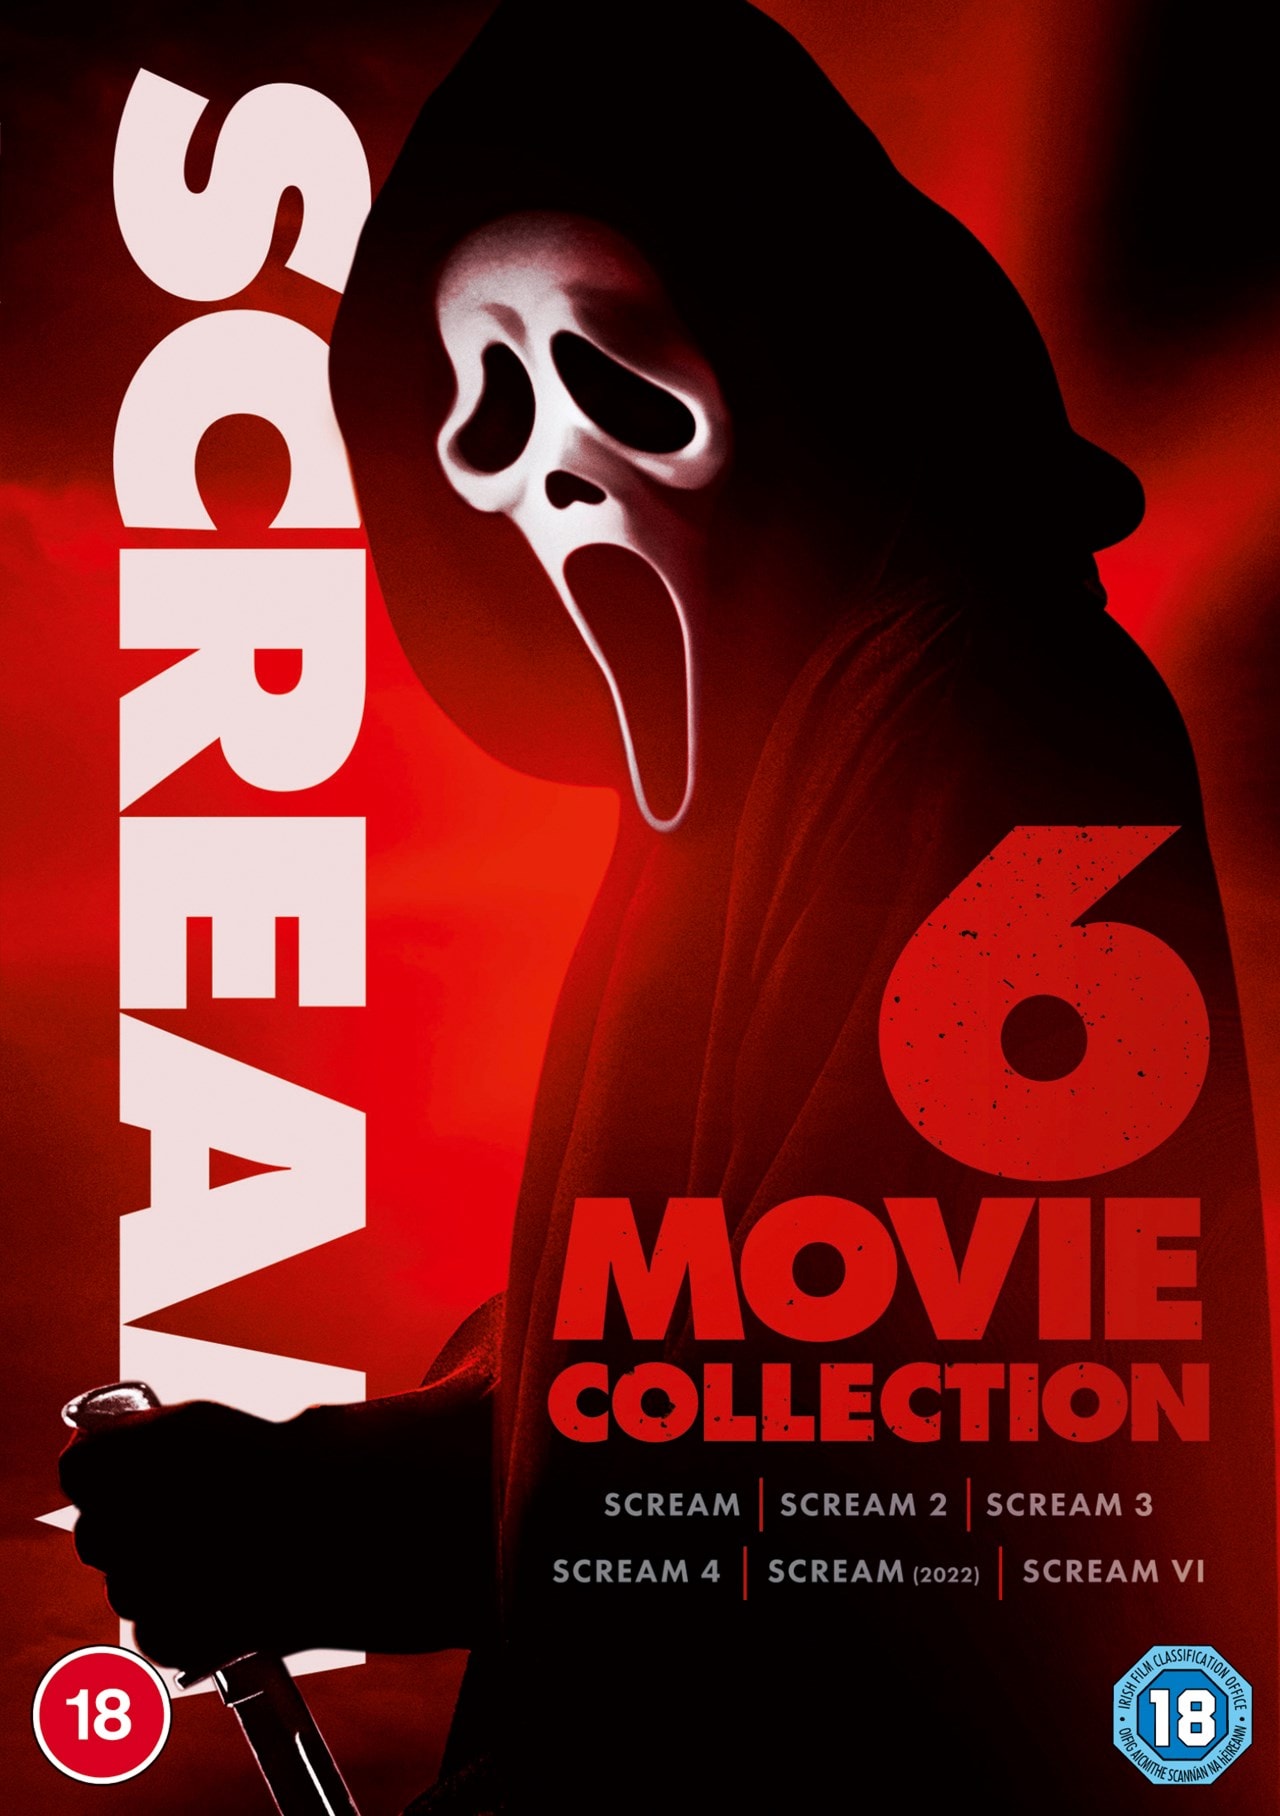 Scream 6 Movie Collection DVD Box Set Free shipping over £20 HMV